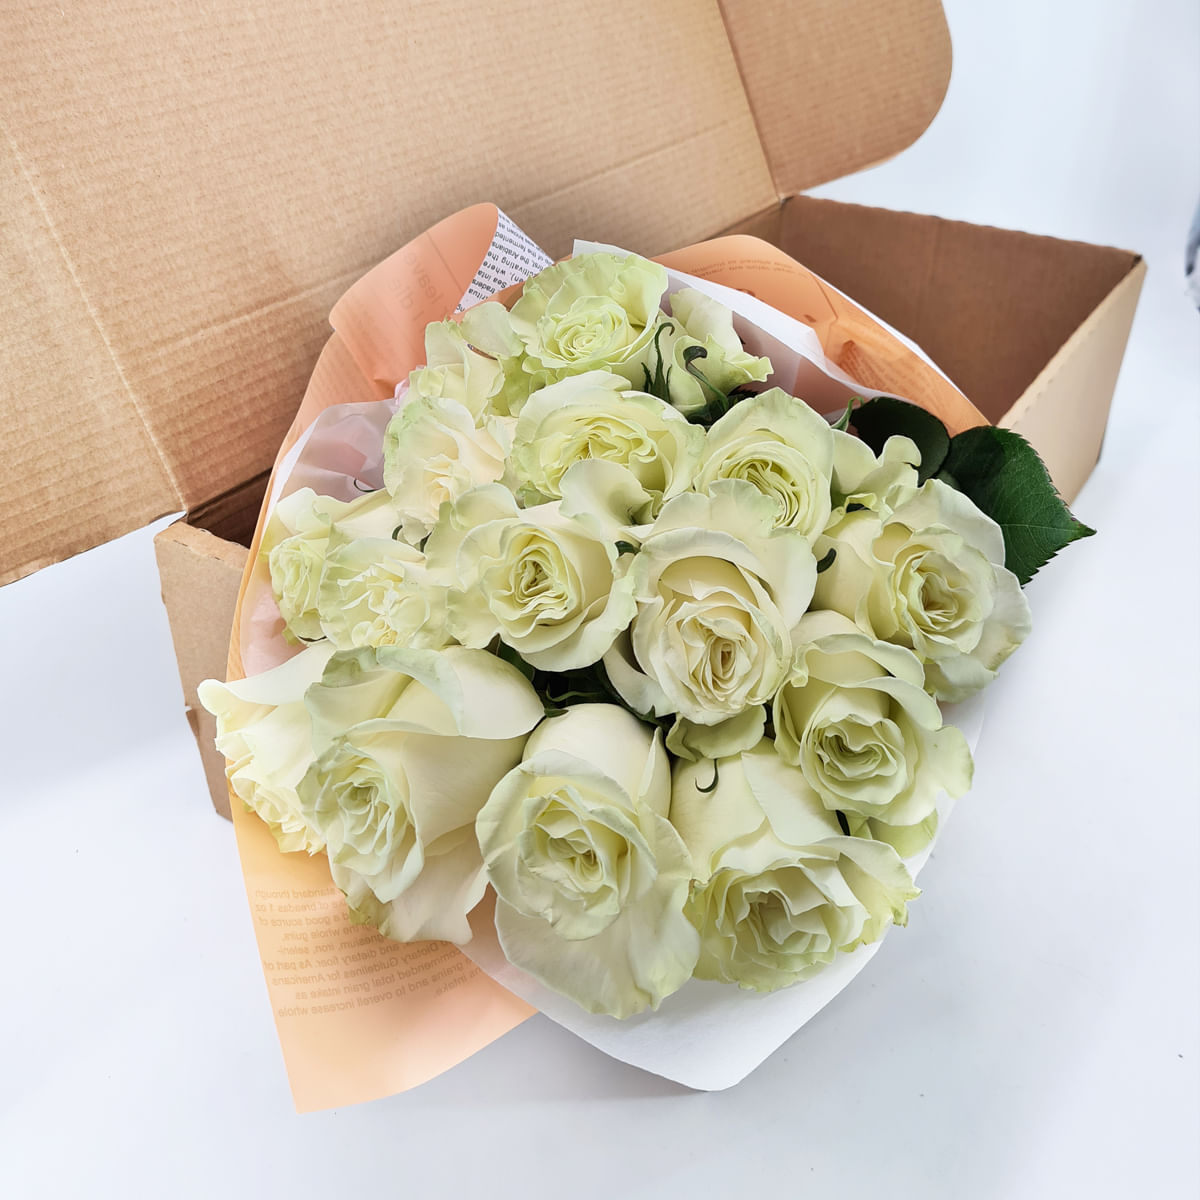 Buchet de 15 trandafiri albi in cutie floria.ro